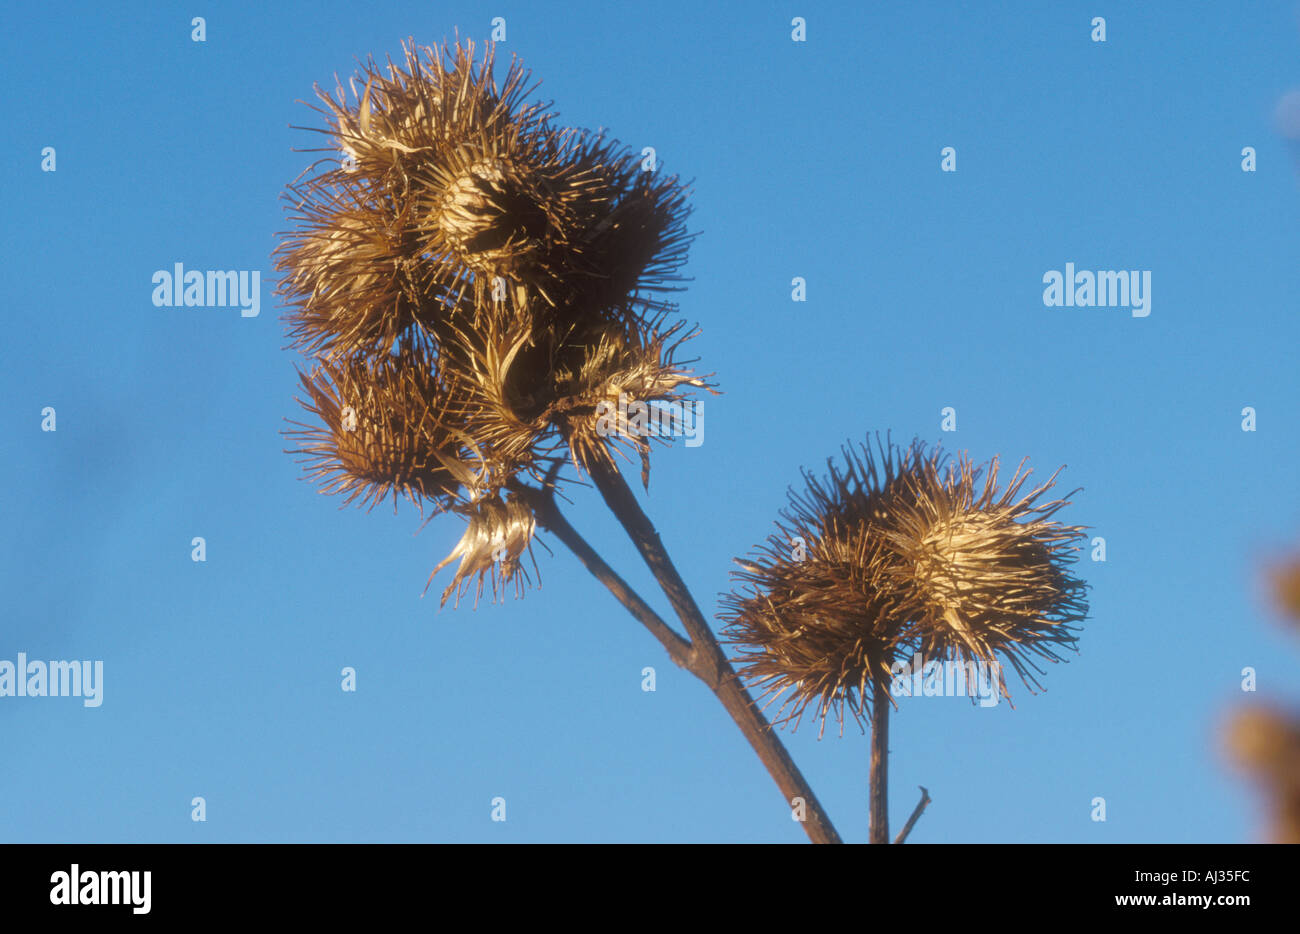 Burdock seed head Stock Photo - Alamy